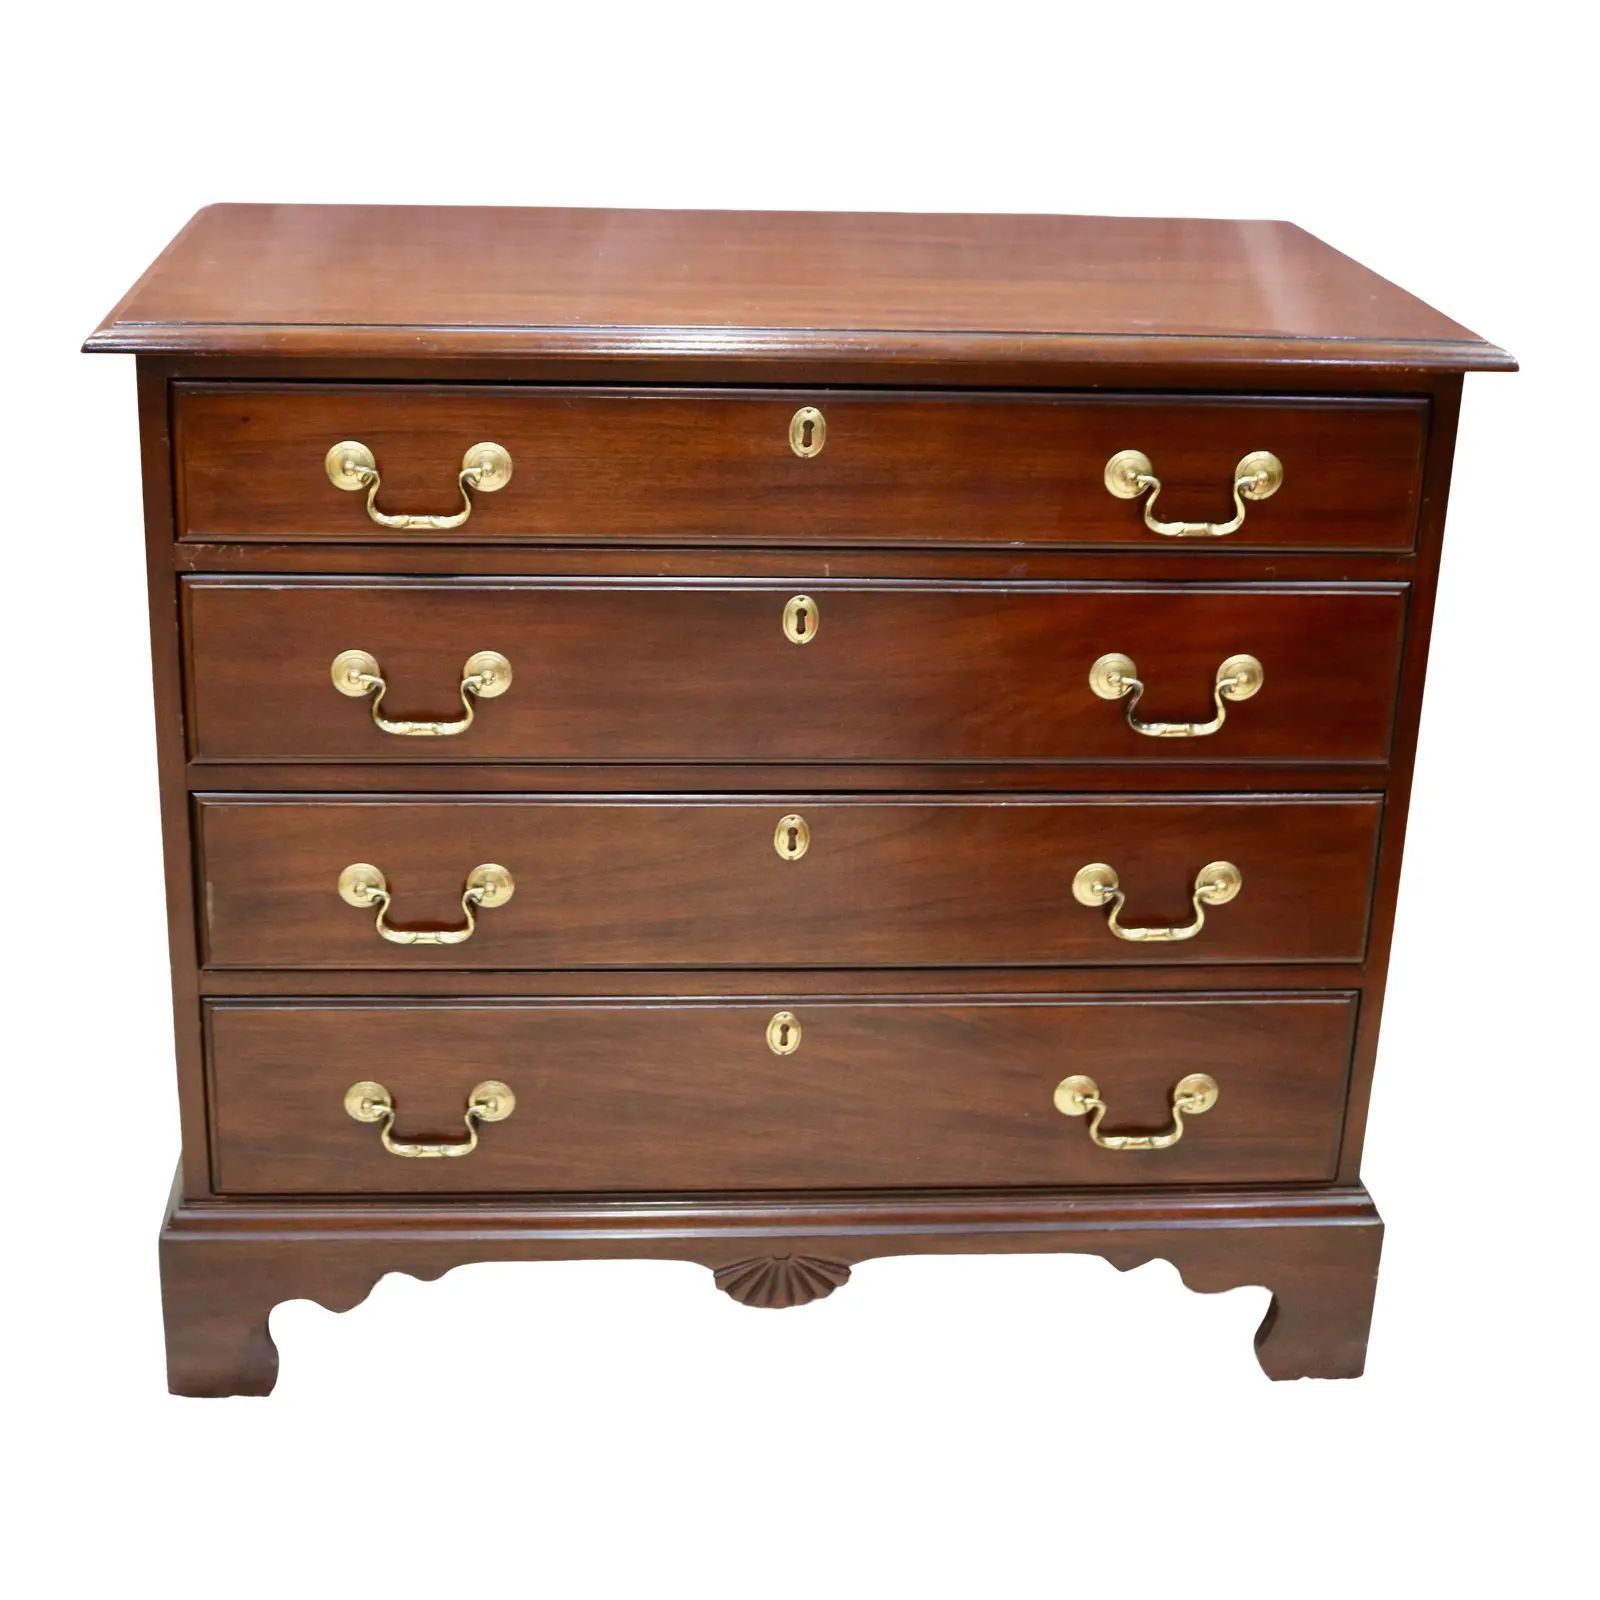 Davis Cabinet Furniture Co Solid Mahogany 4 Drawer Chest | Chairish